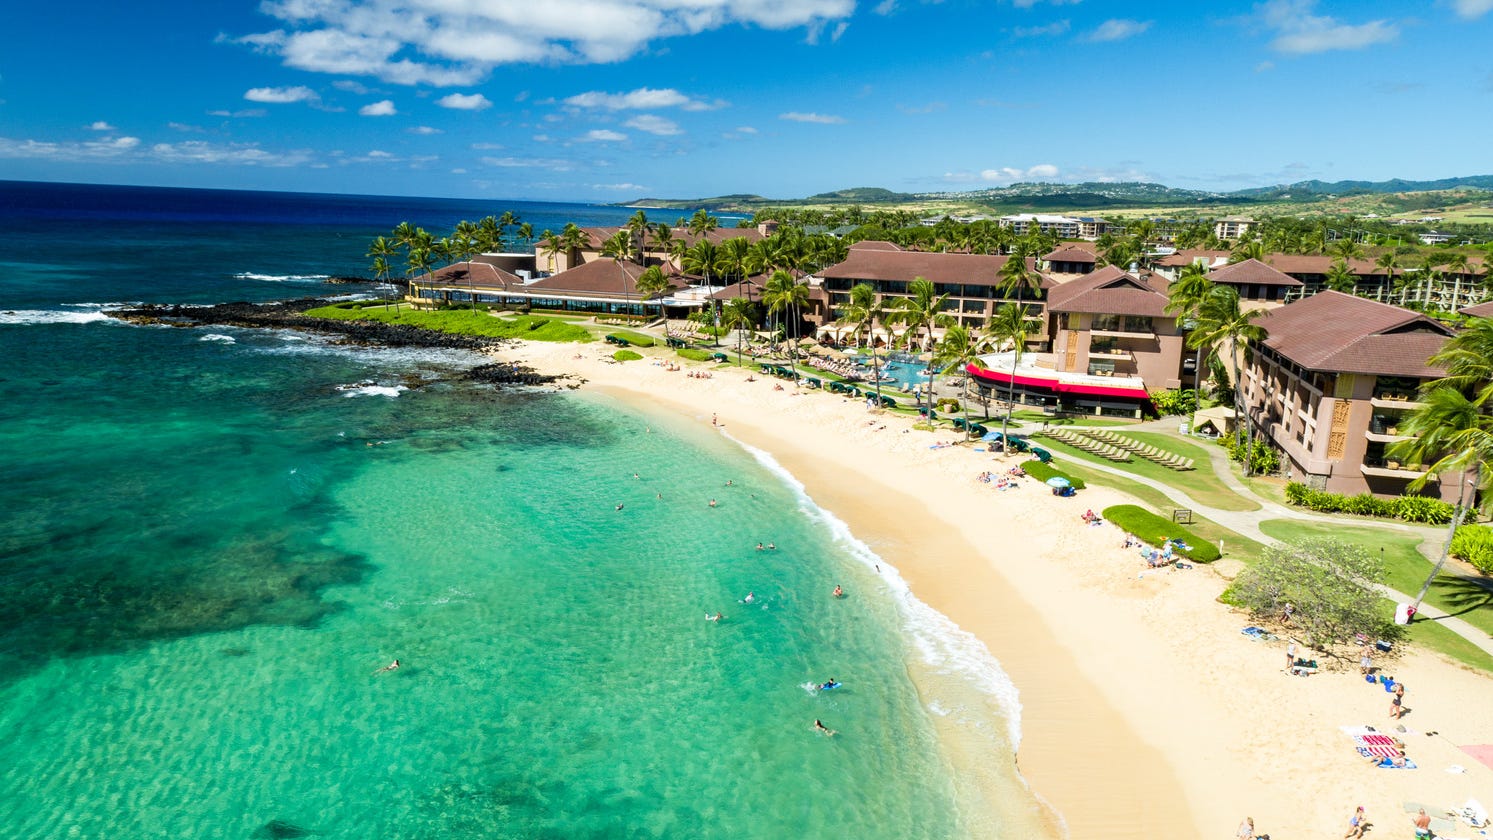 Poipu Beach is the focal point of the Sheraton Kauai Resort, and for good reason.